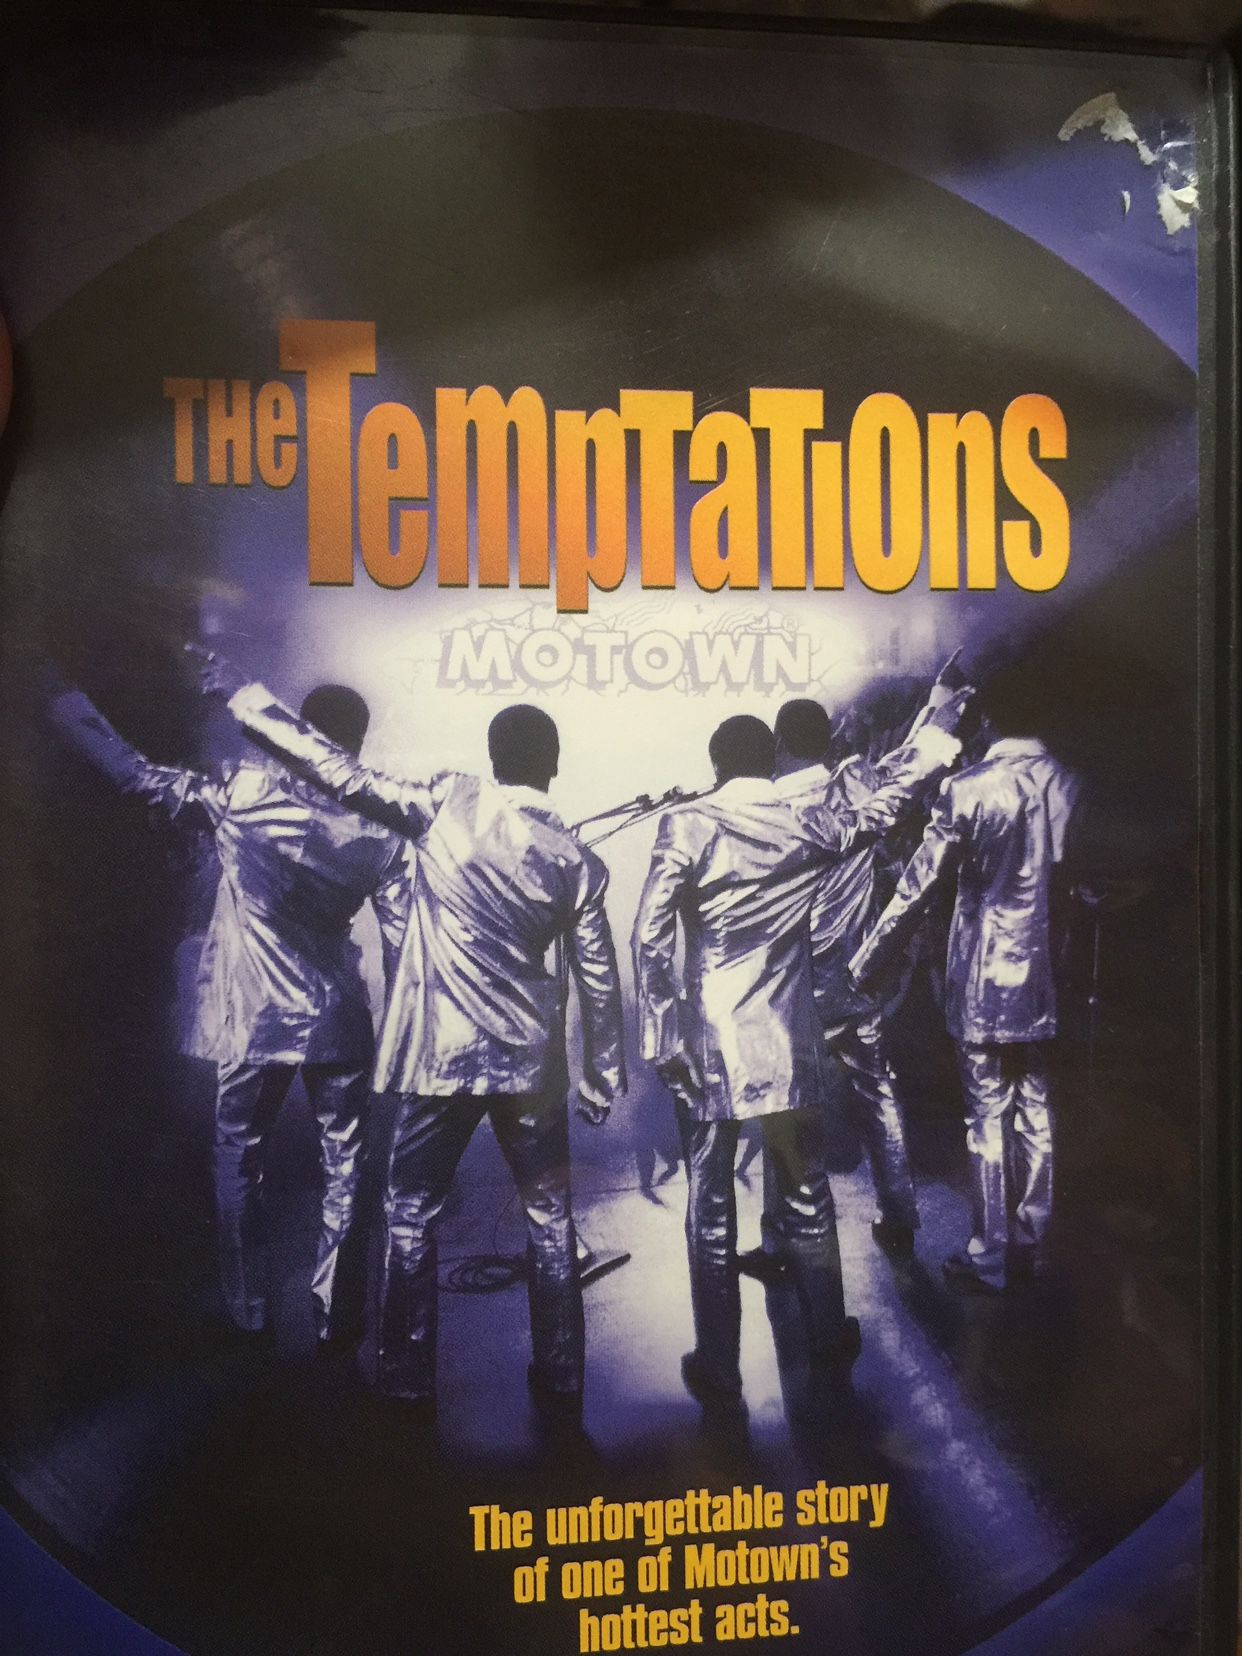 The Temptations Dvd